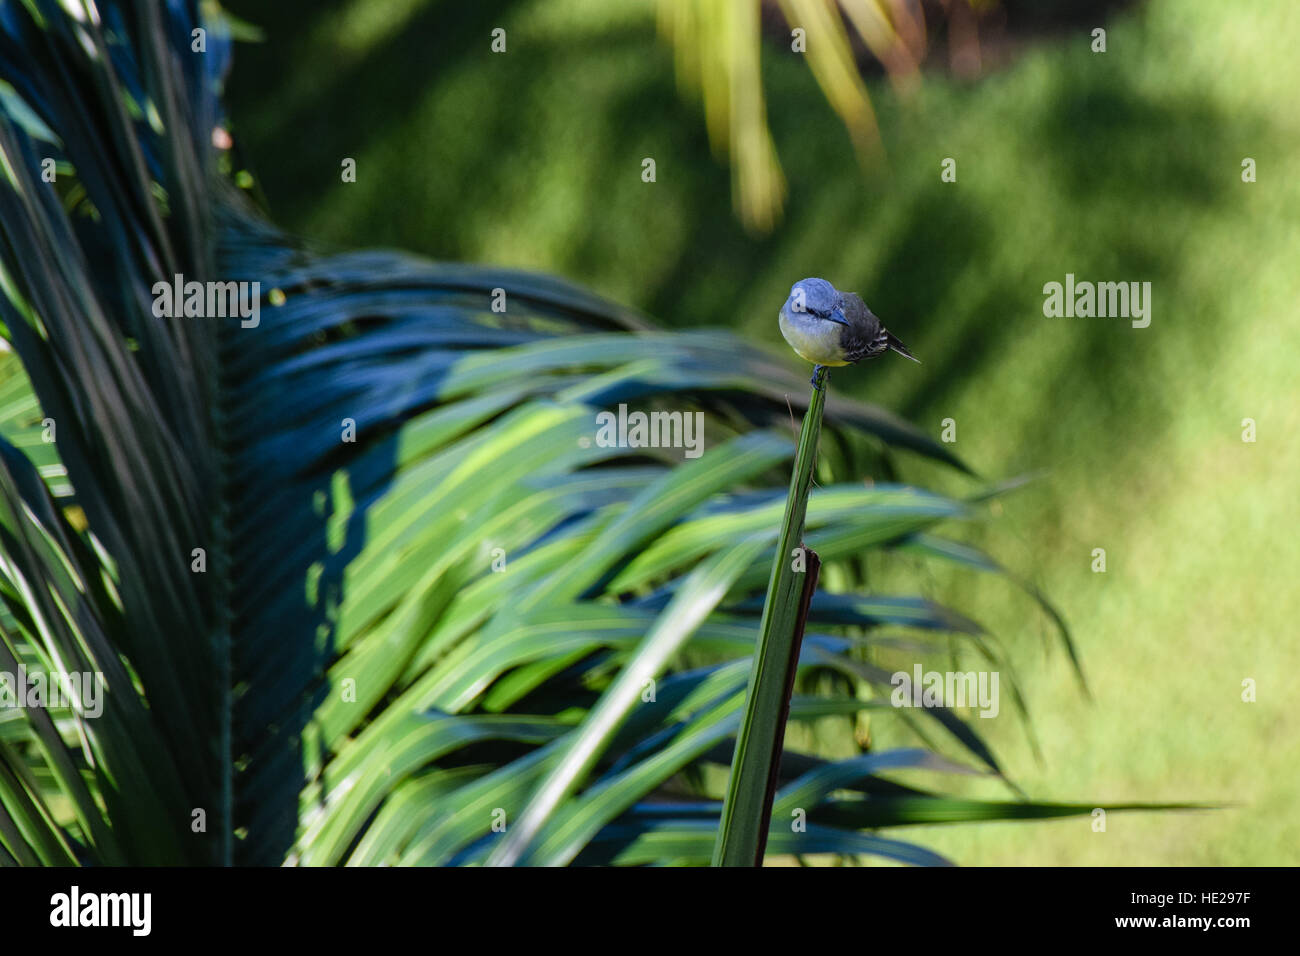 Wild bird perched on palm leaf Stock Photo